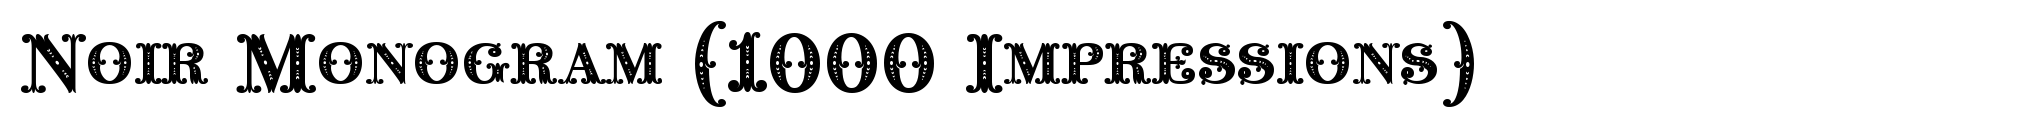 Noir Monogram (1000 Impressions) image